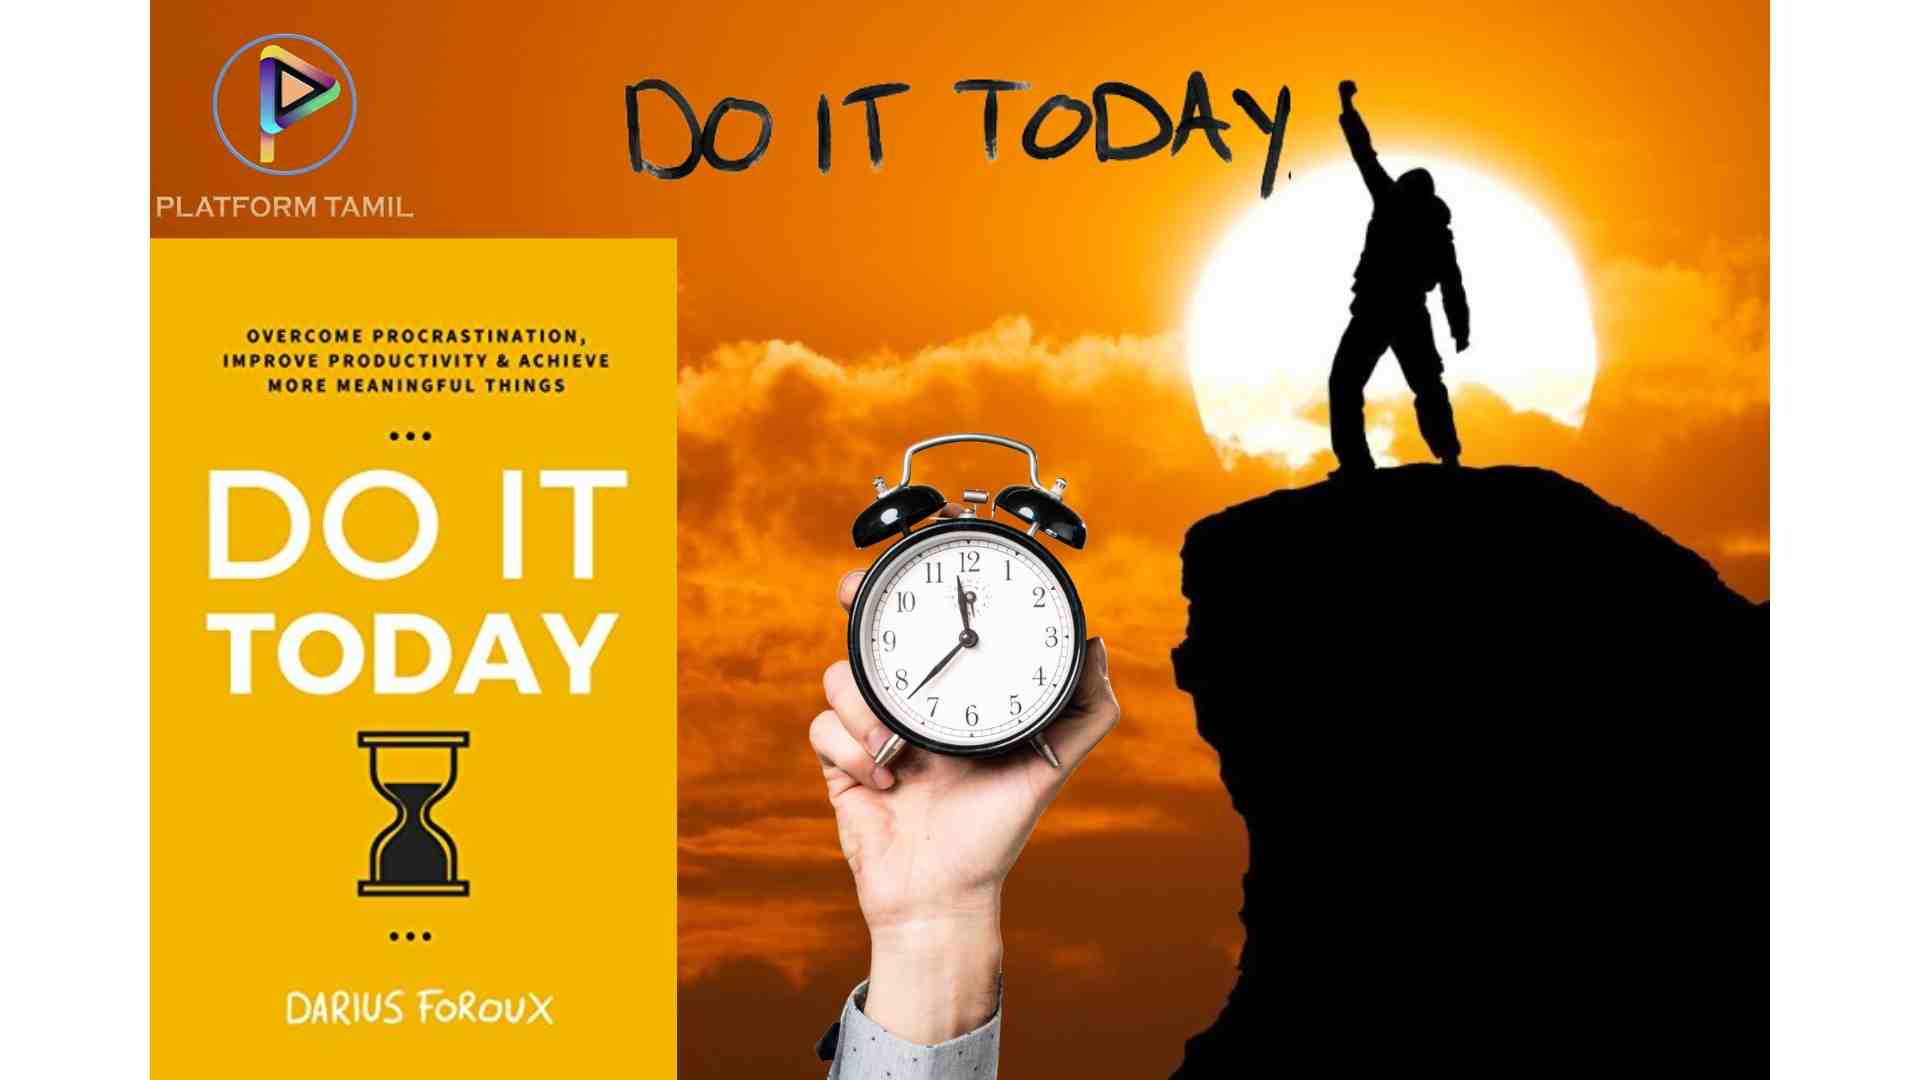 Do It Today Book Review - இன்றே செய்யுங்கள்! - Platform Tamil